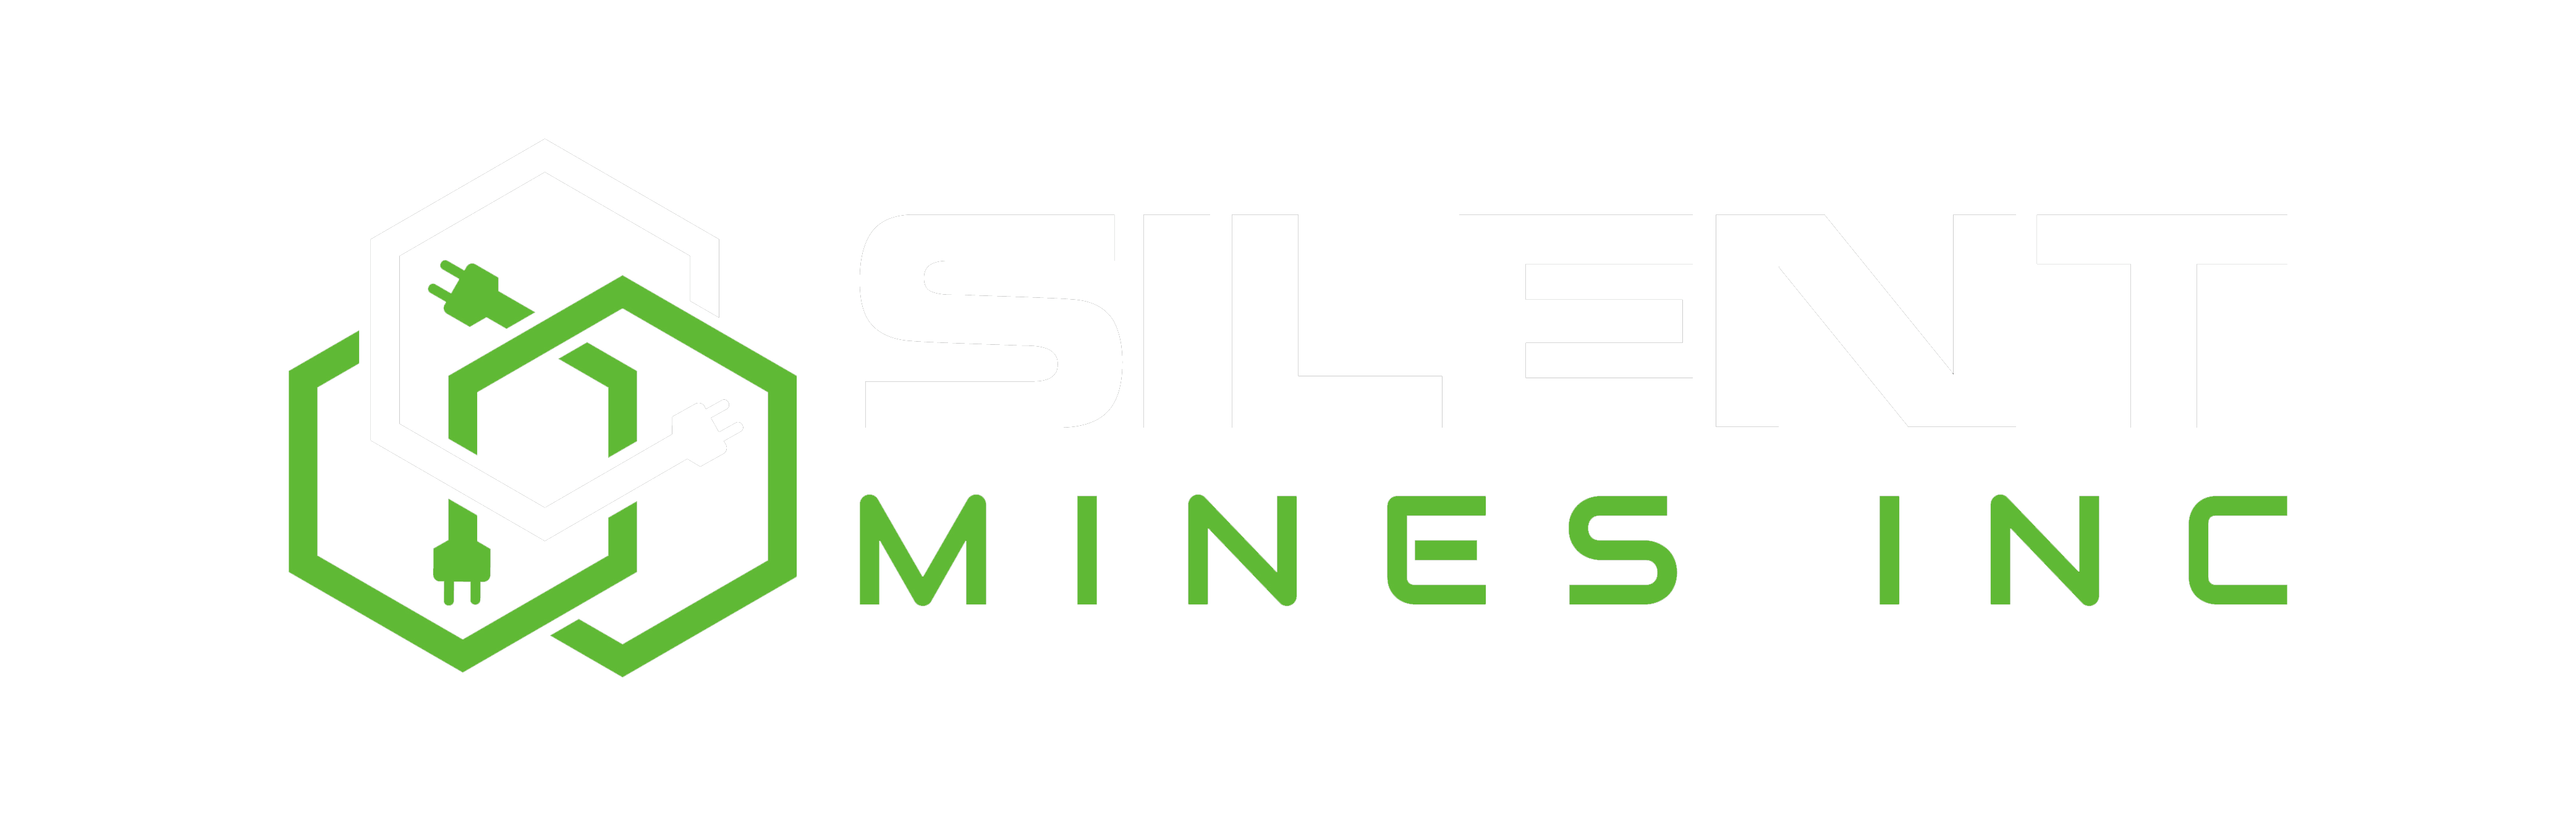 Silent Mines Inc.